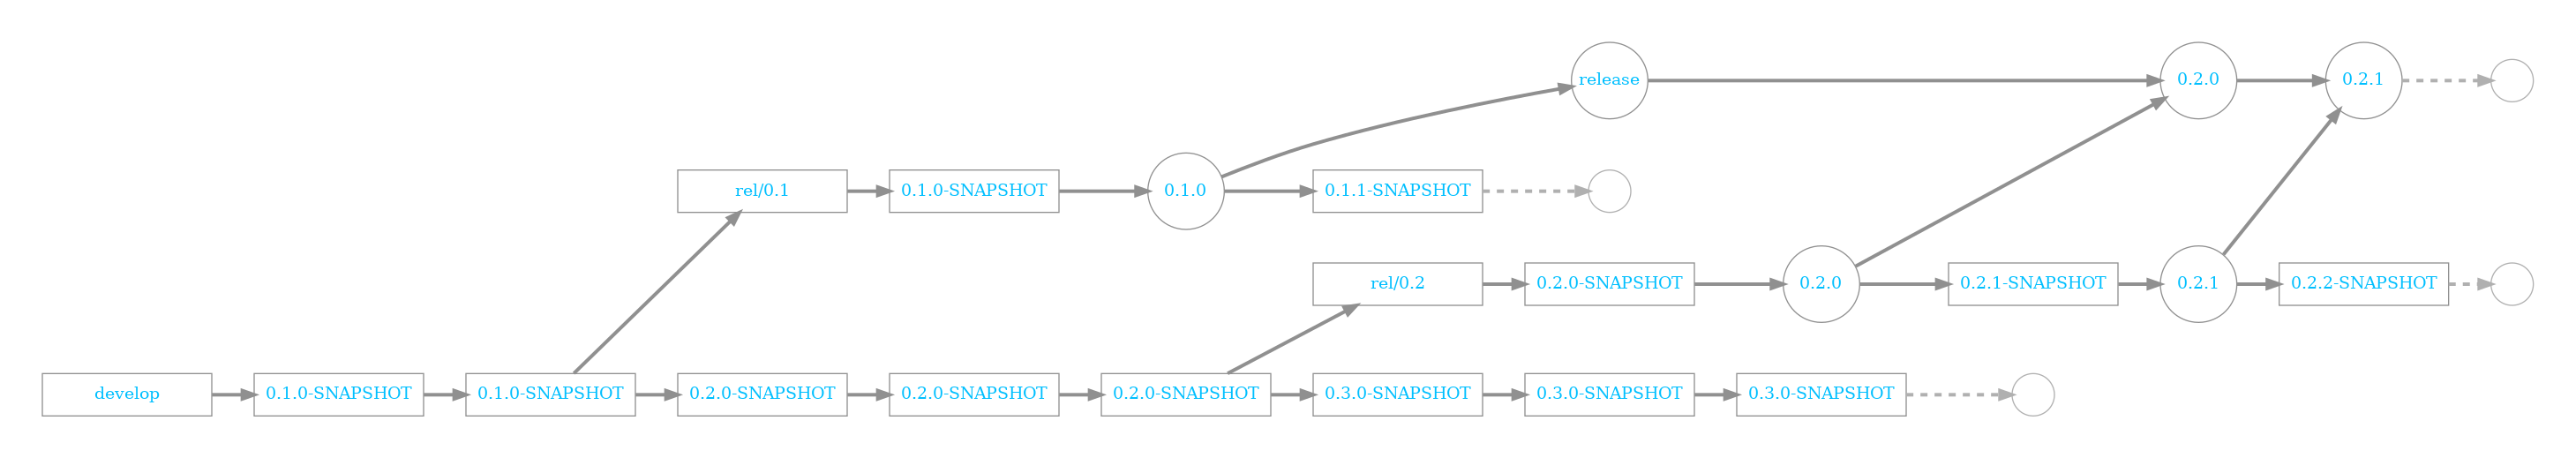 plc4x branching model